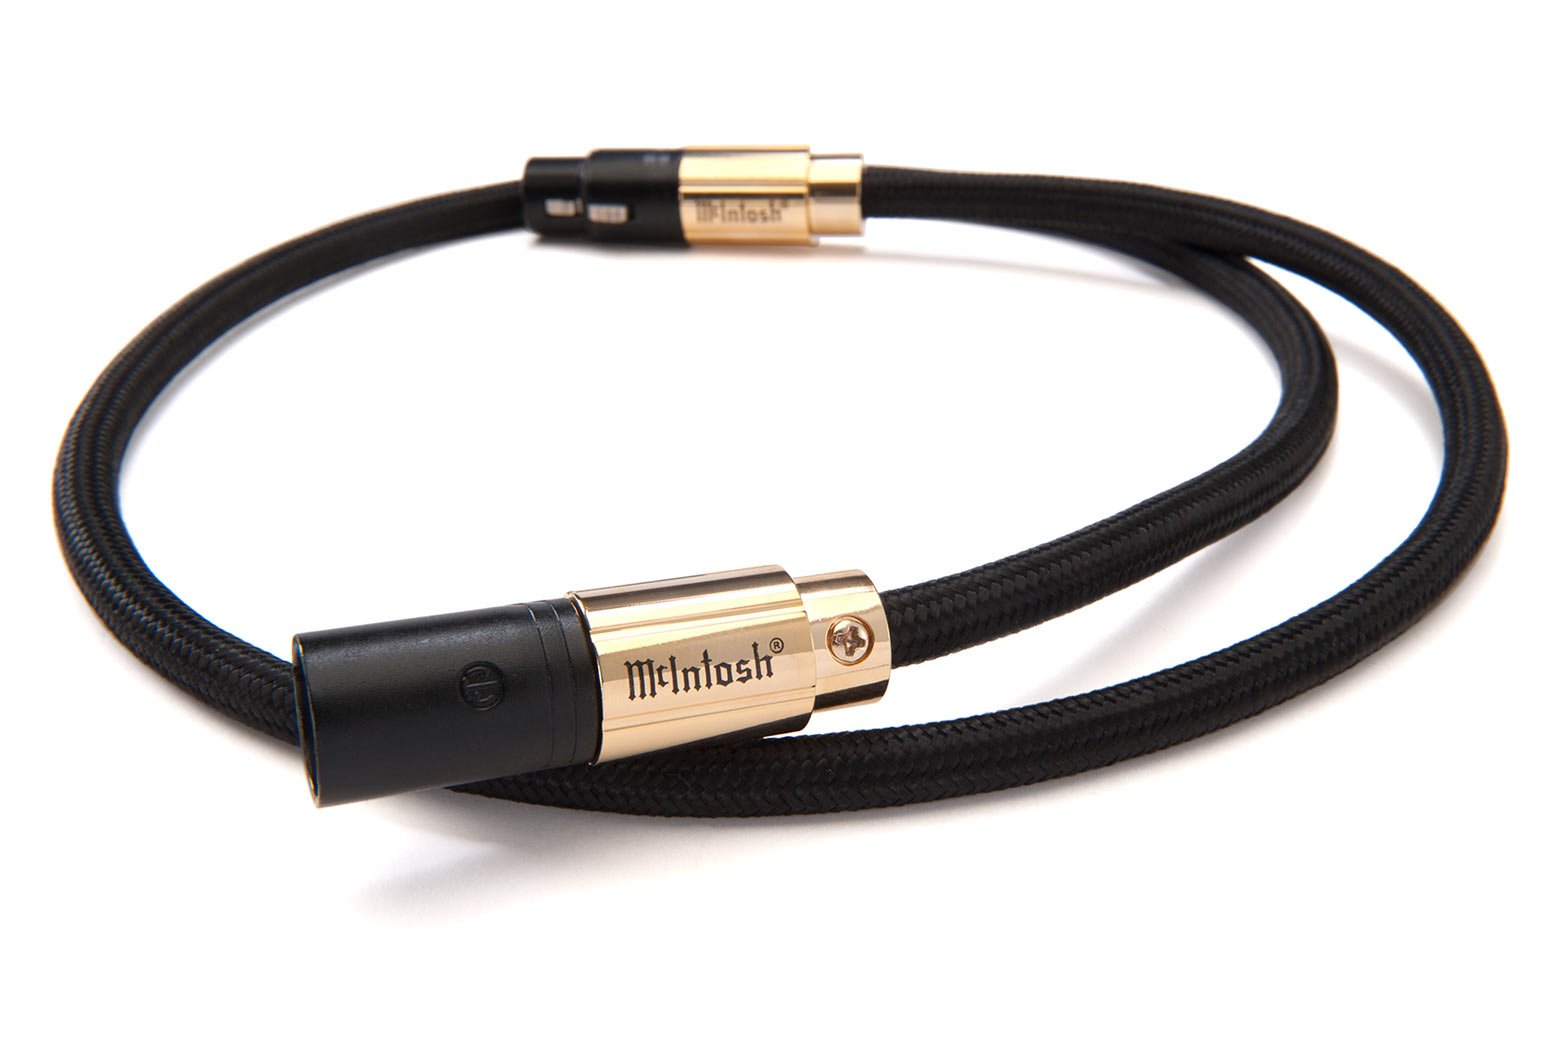 mcintosh balanced audio cable cables close up 